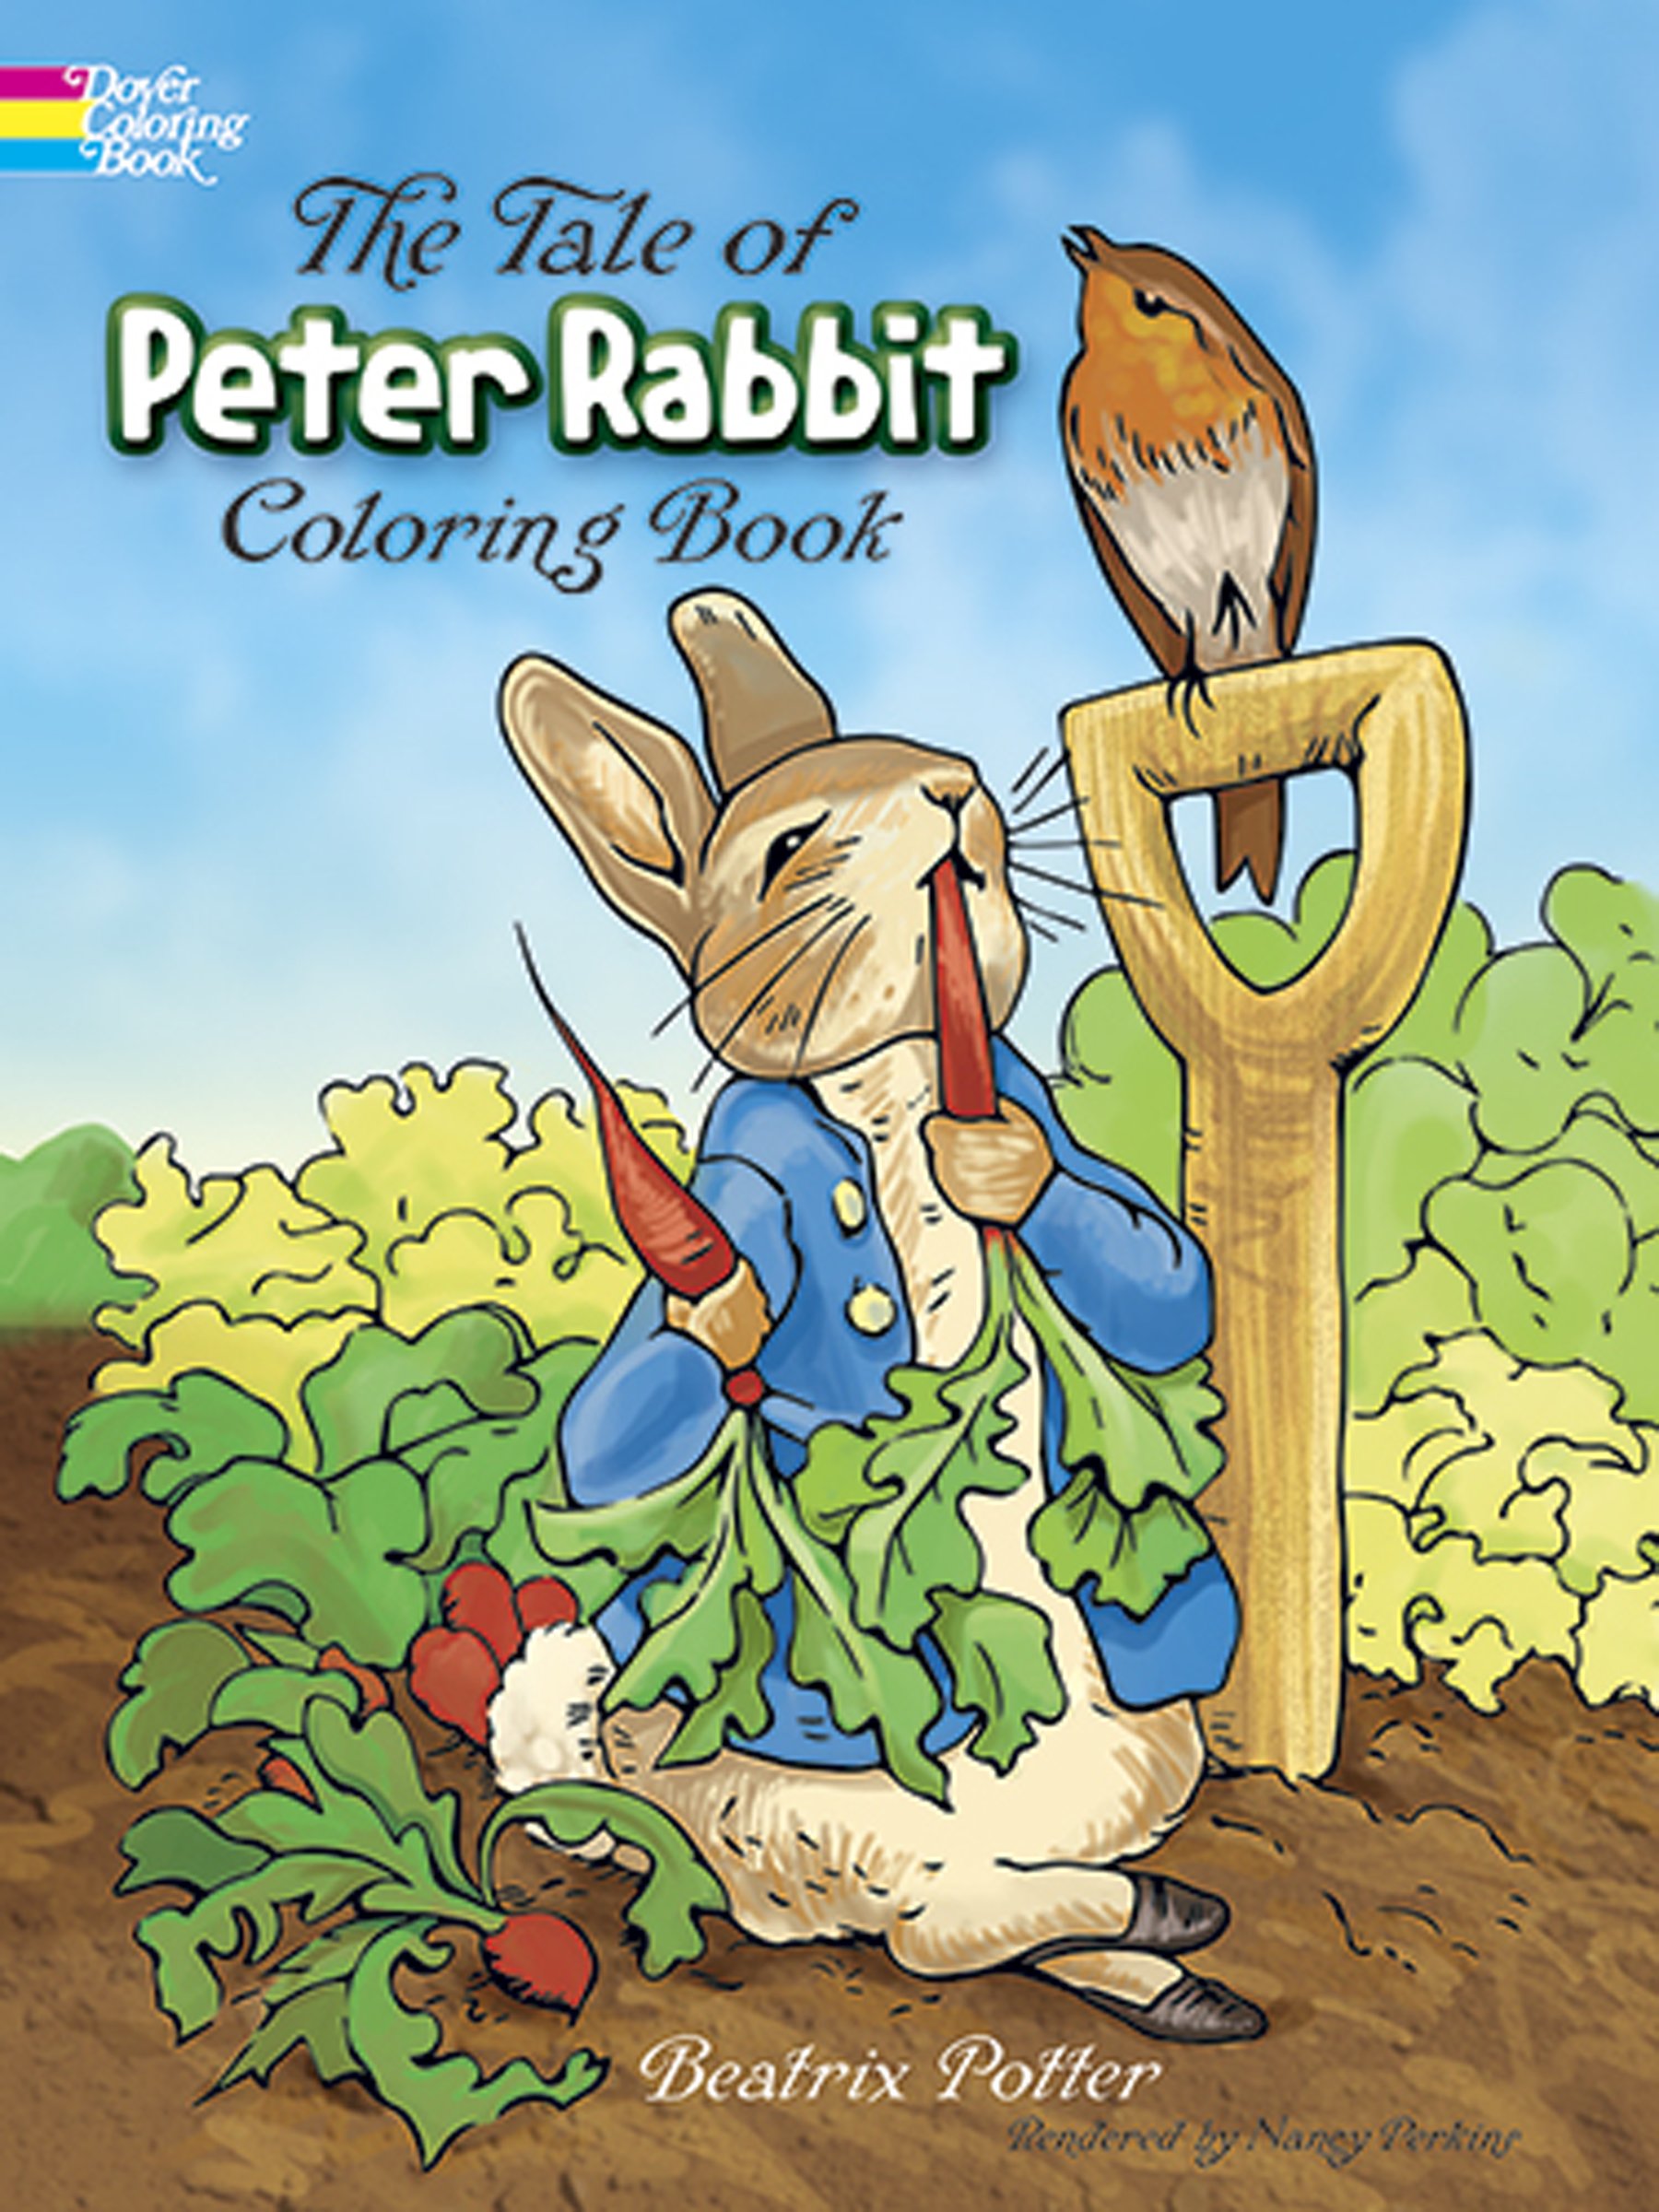 The Beatrix Potter Coloring Book Peter Rabbit 